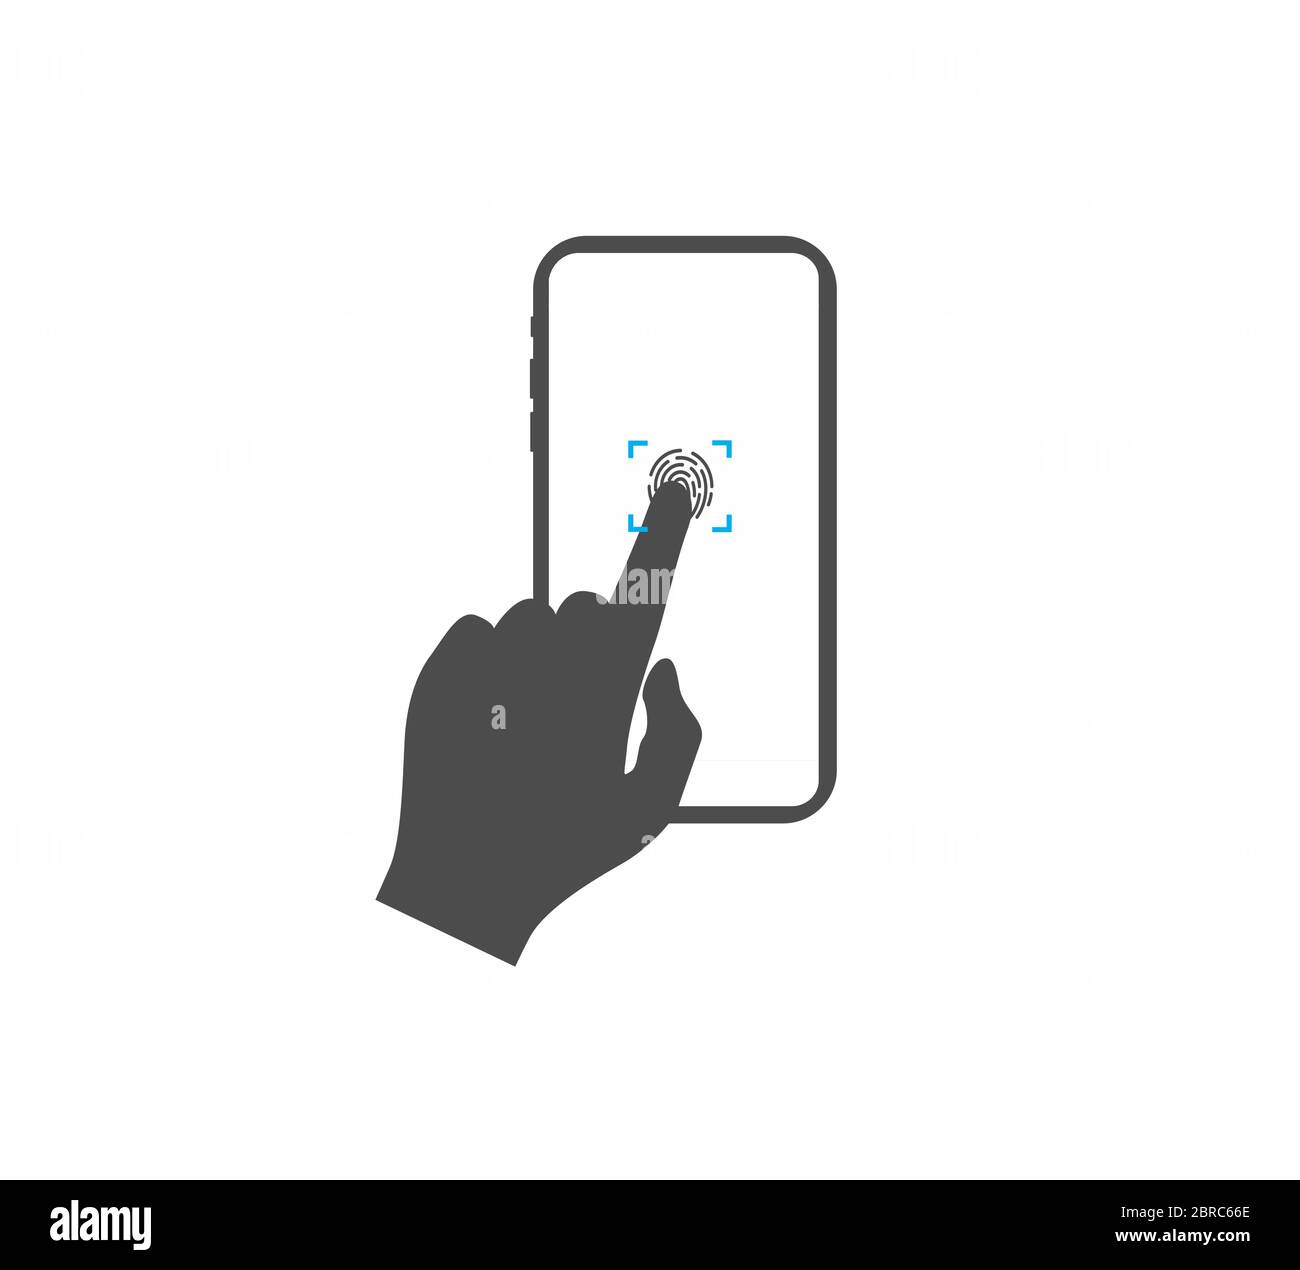 Fingerprint - Identification and unlocking the smartphone screen Stock Vector